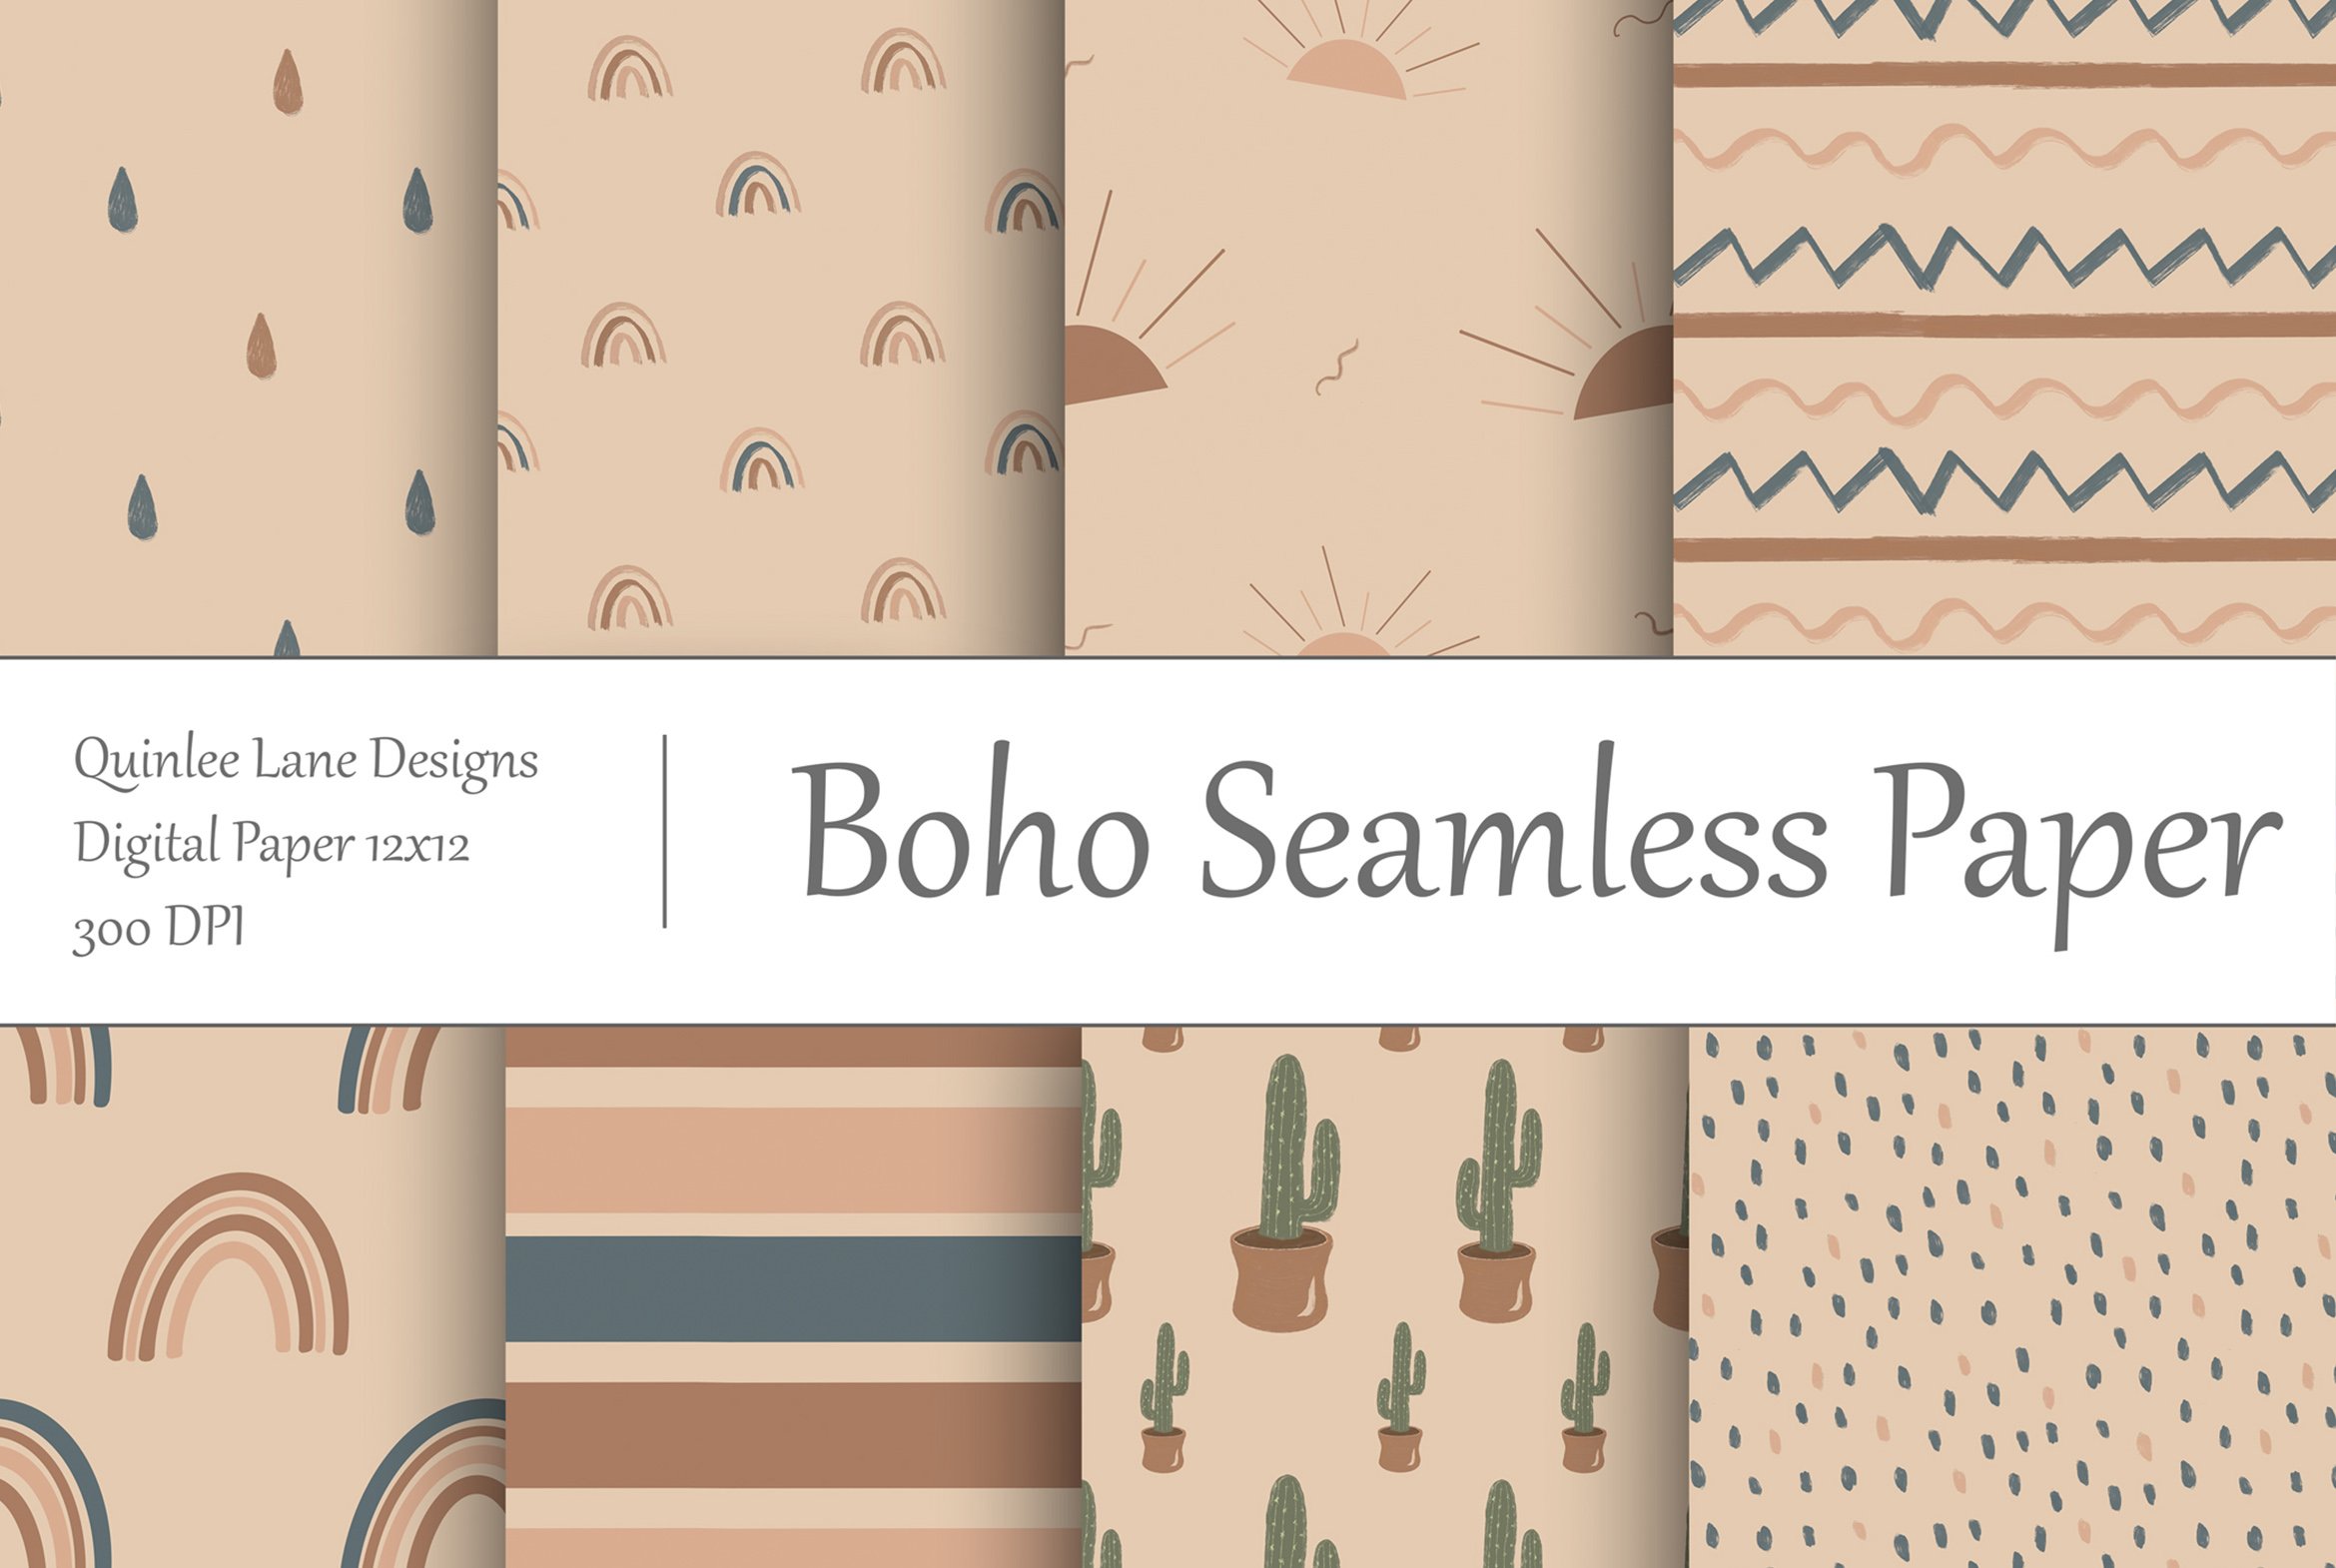 Boho Seamless Digital Pattern Pack cover image.